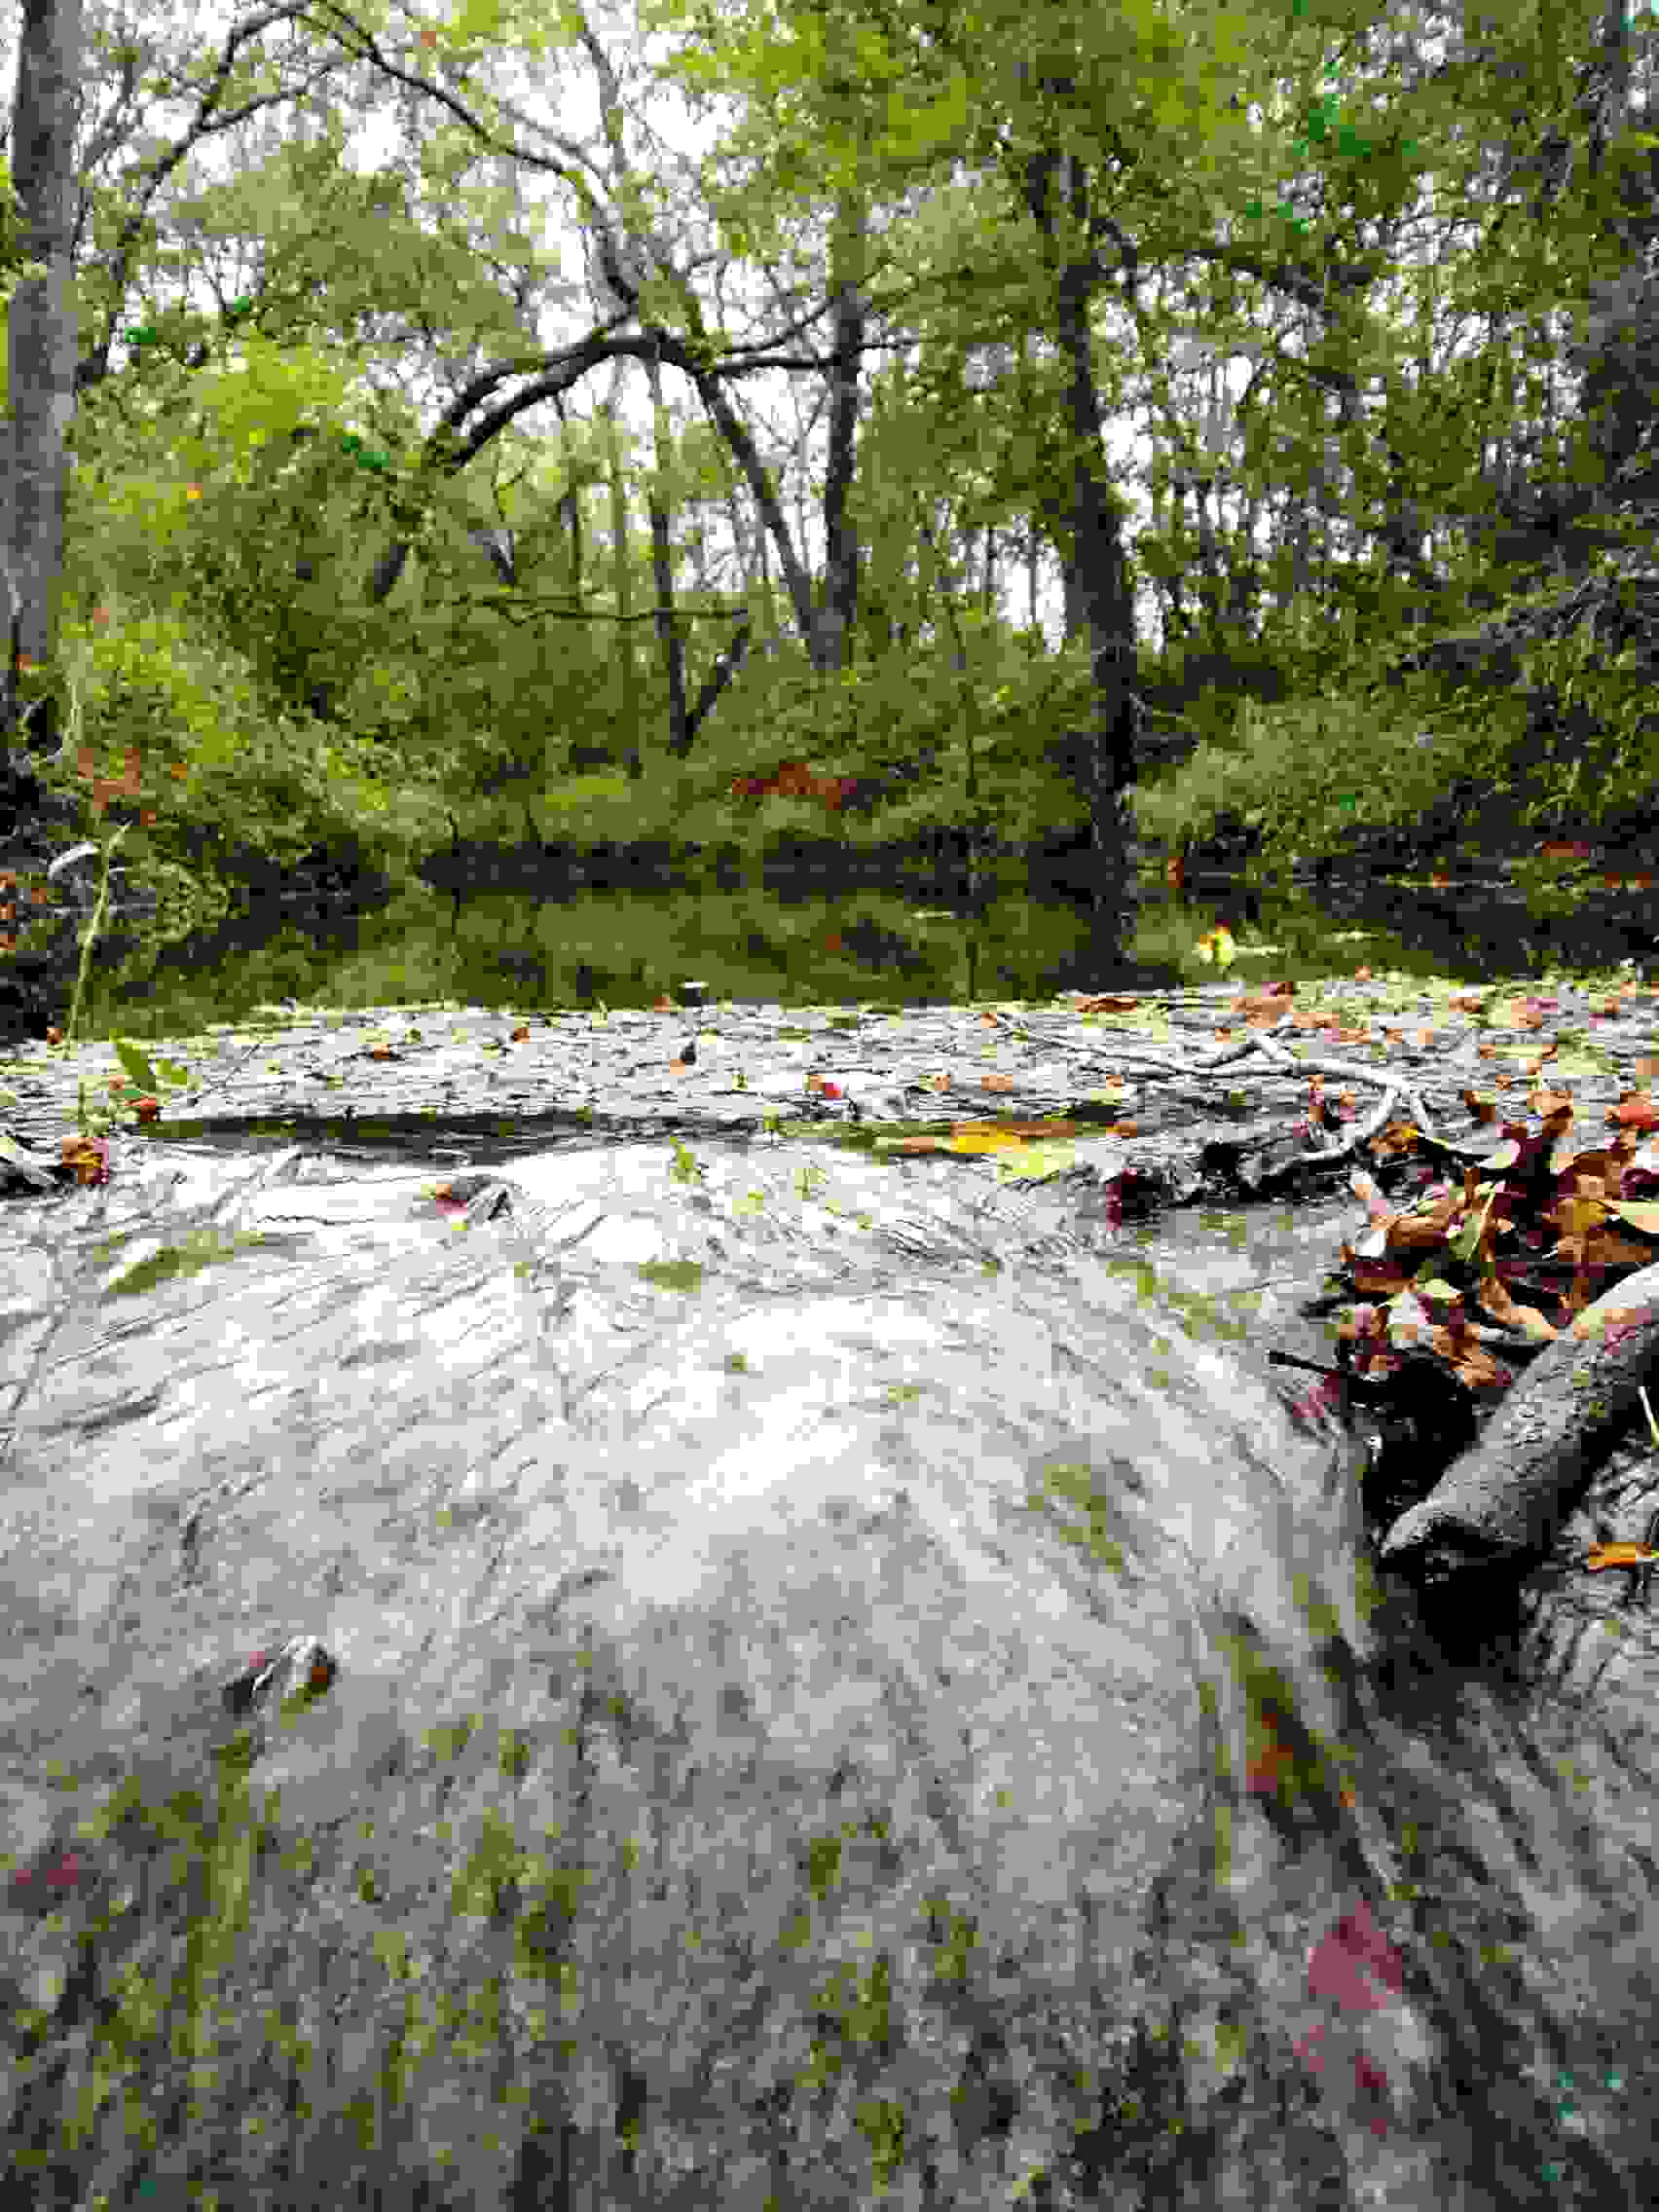 Texas Riparian & Stream Ecosystem Training – Plum Creek Watershed